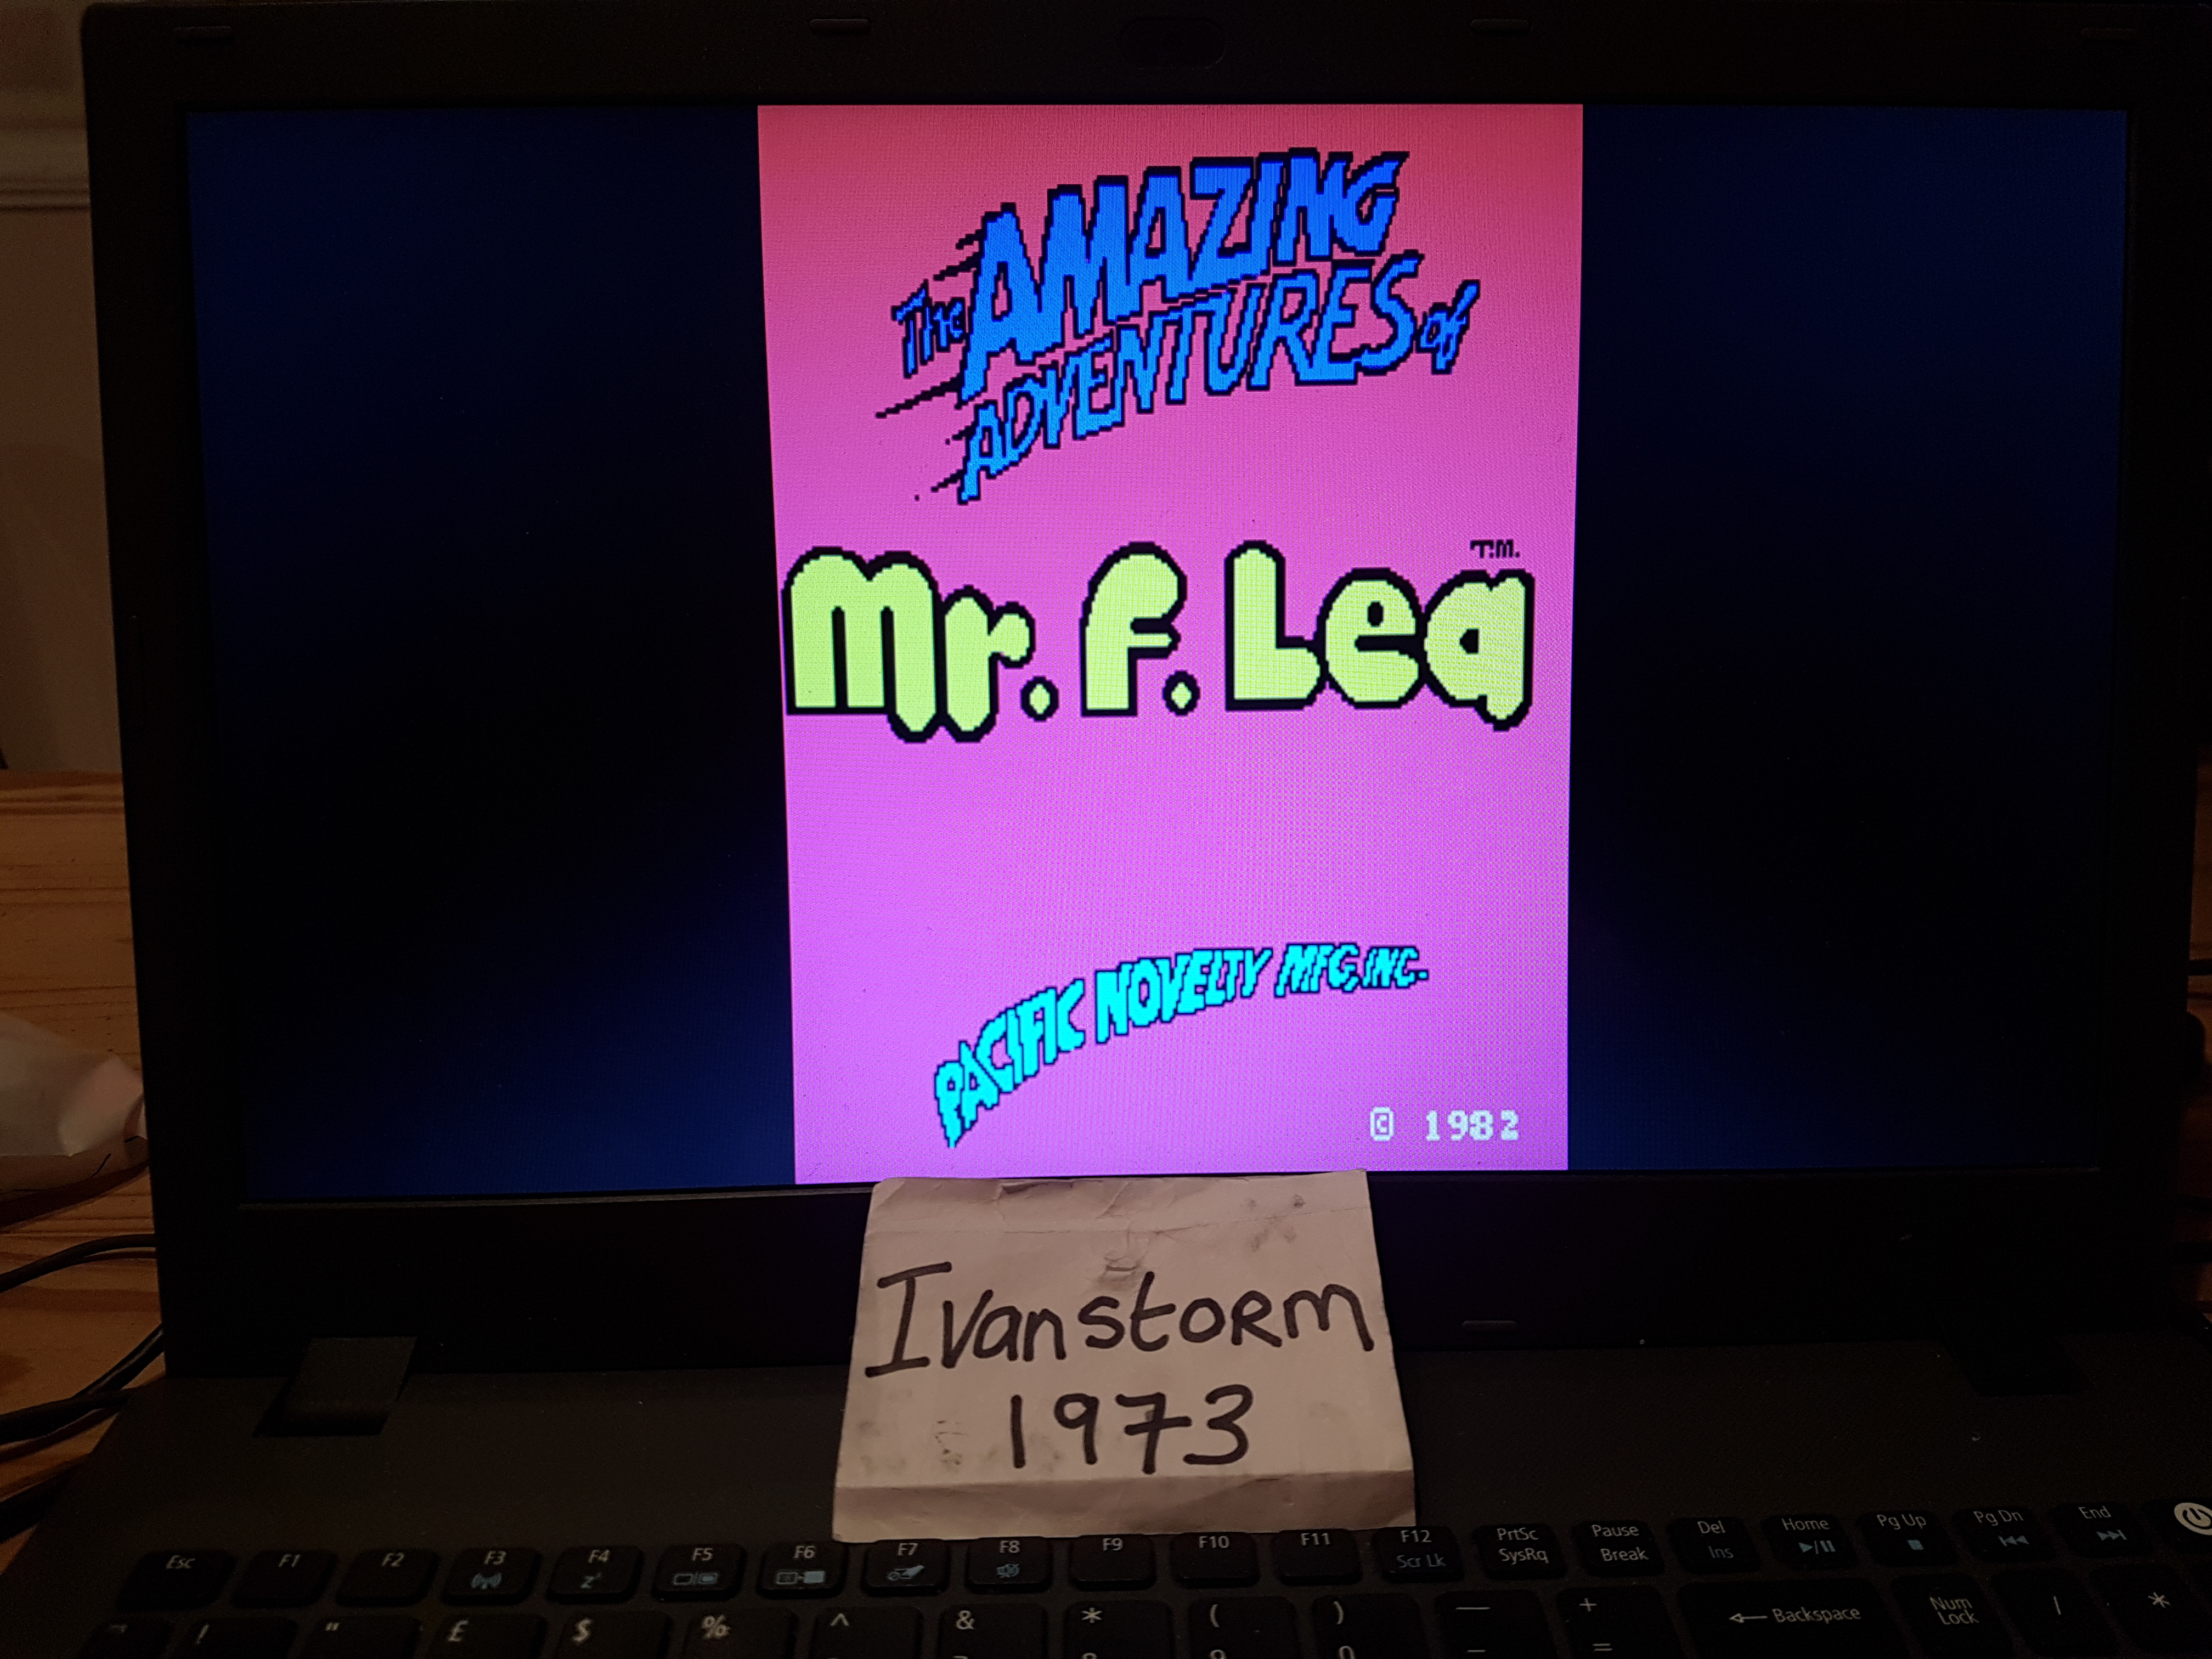 Ivanstorm1973: The Amazing Adventures of Mr. F. Lea [mrflea] (Arcade Emulated / M.A.M.E.) 56,530 points on 2018-03-04 12:30:33